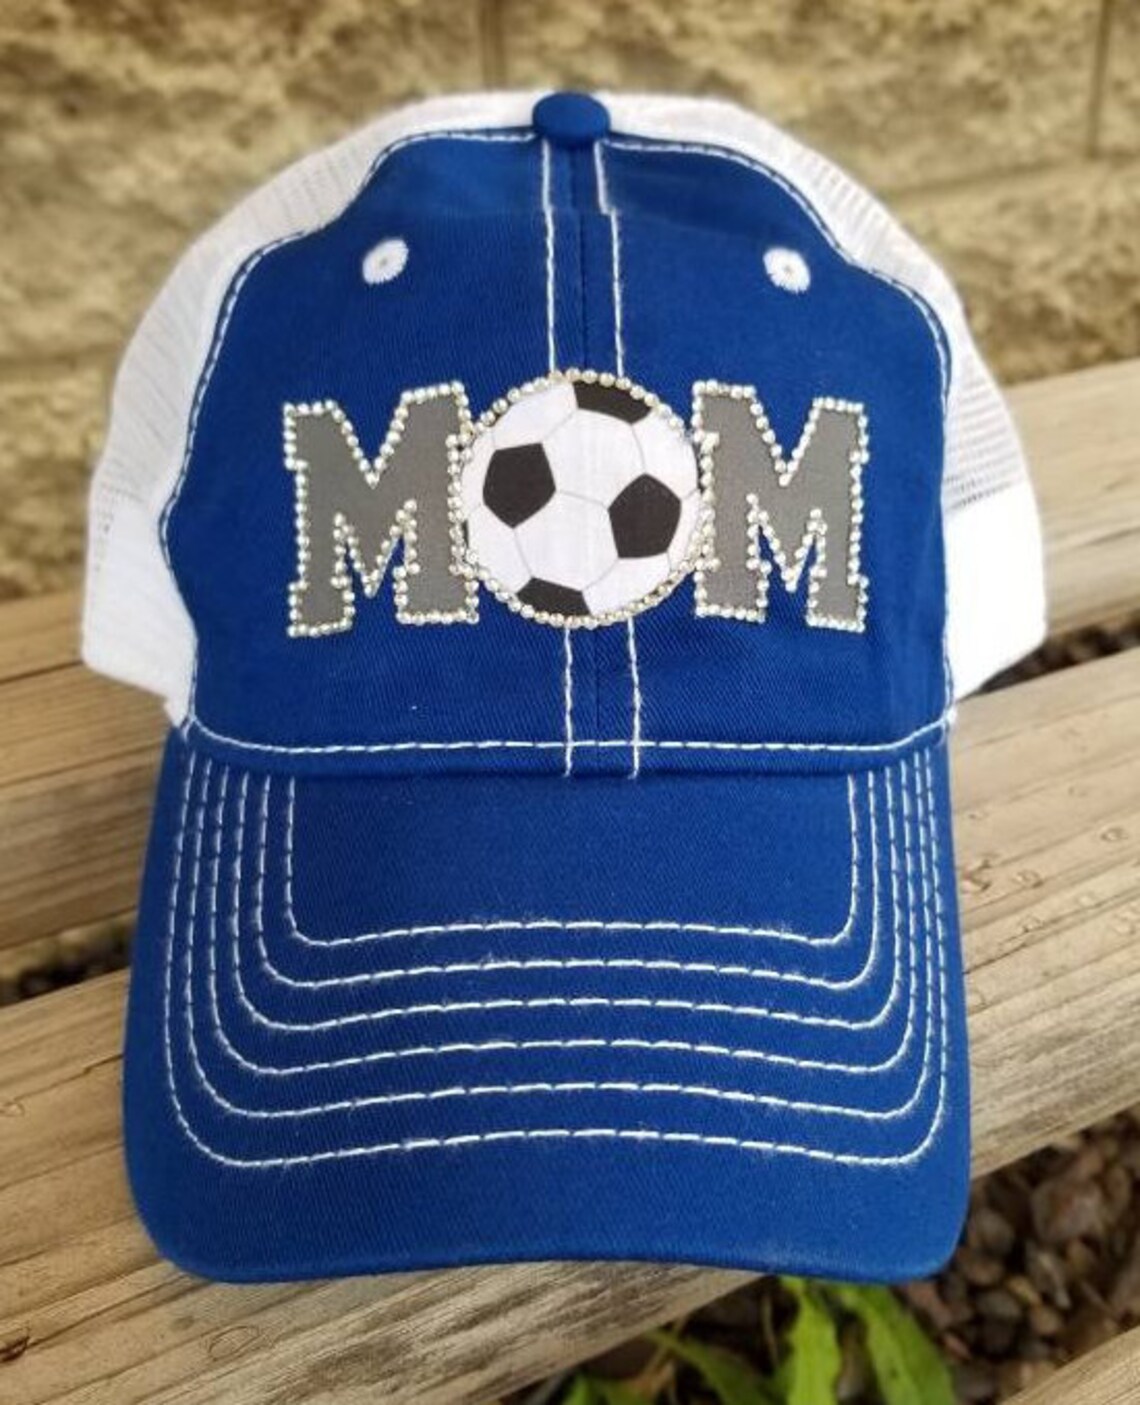 Soccer Mom Hat Bling Soccer Hats Soccer team hats Royal | Etsy